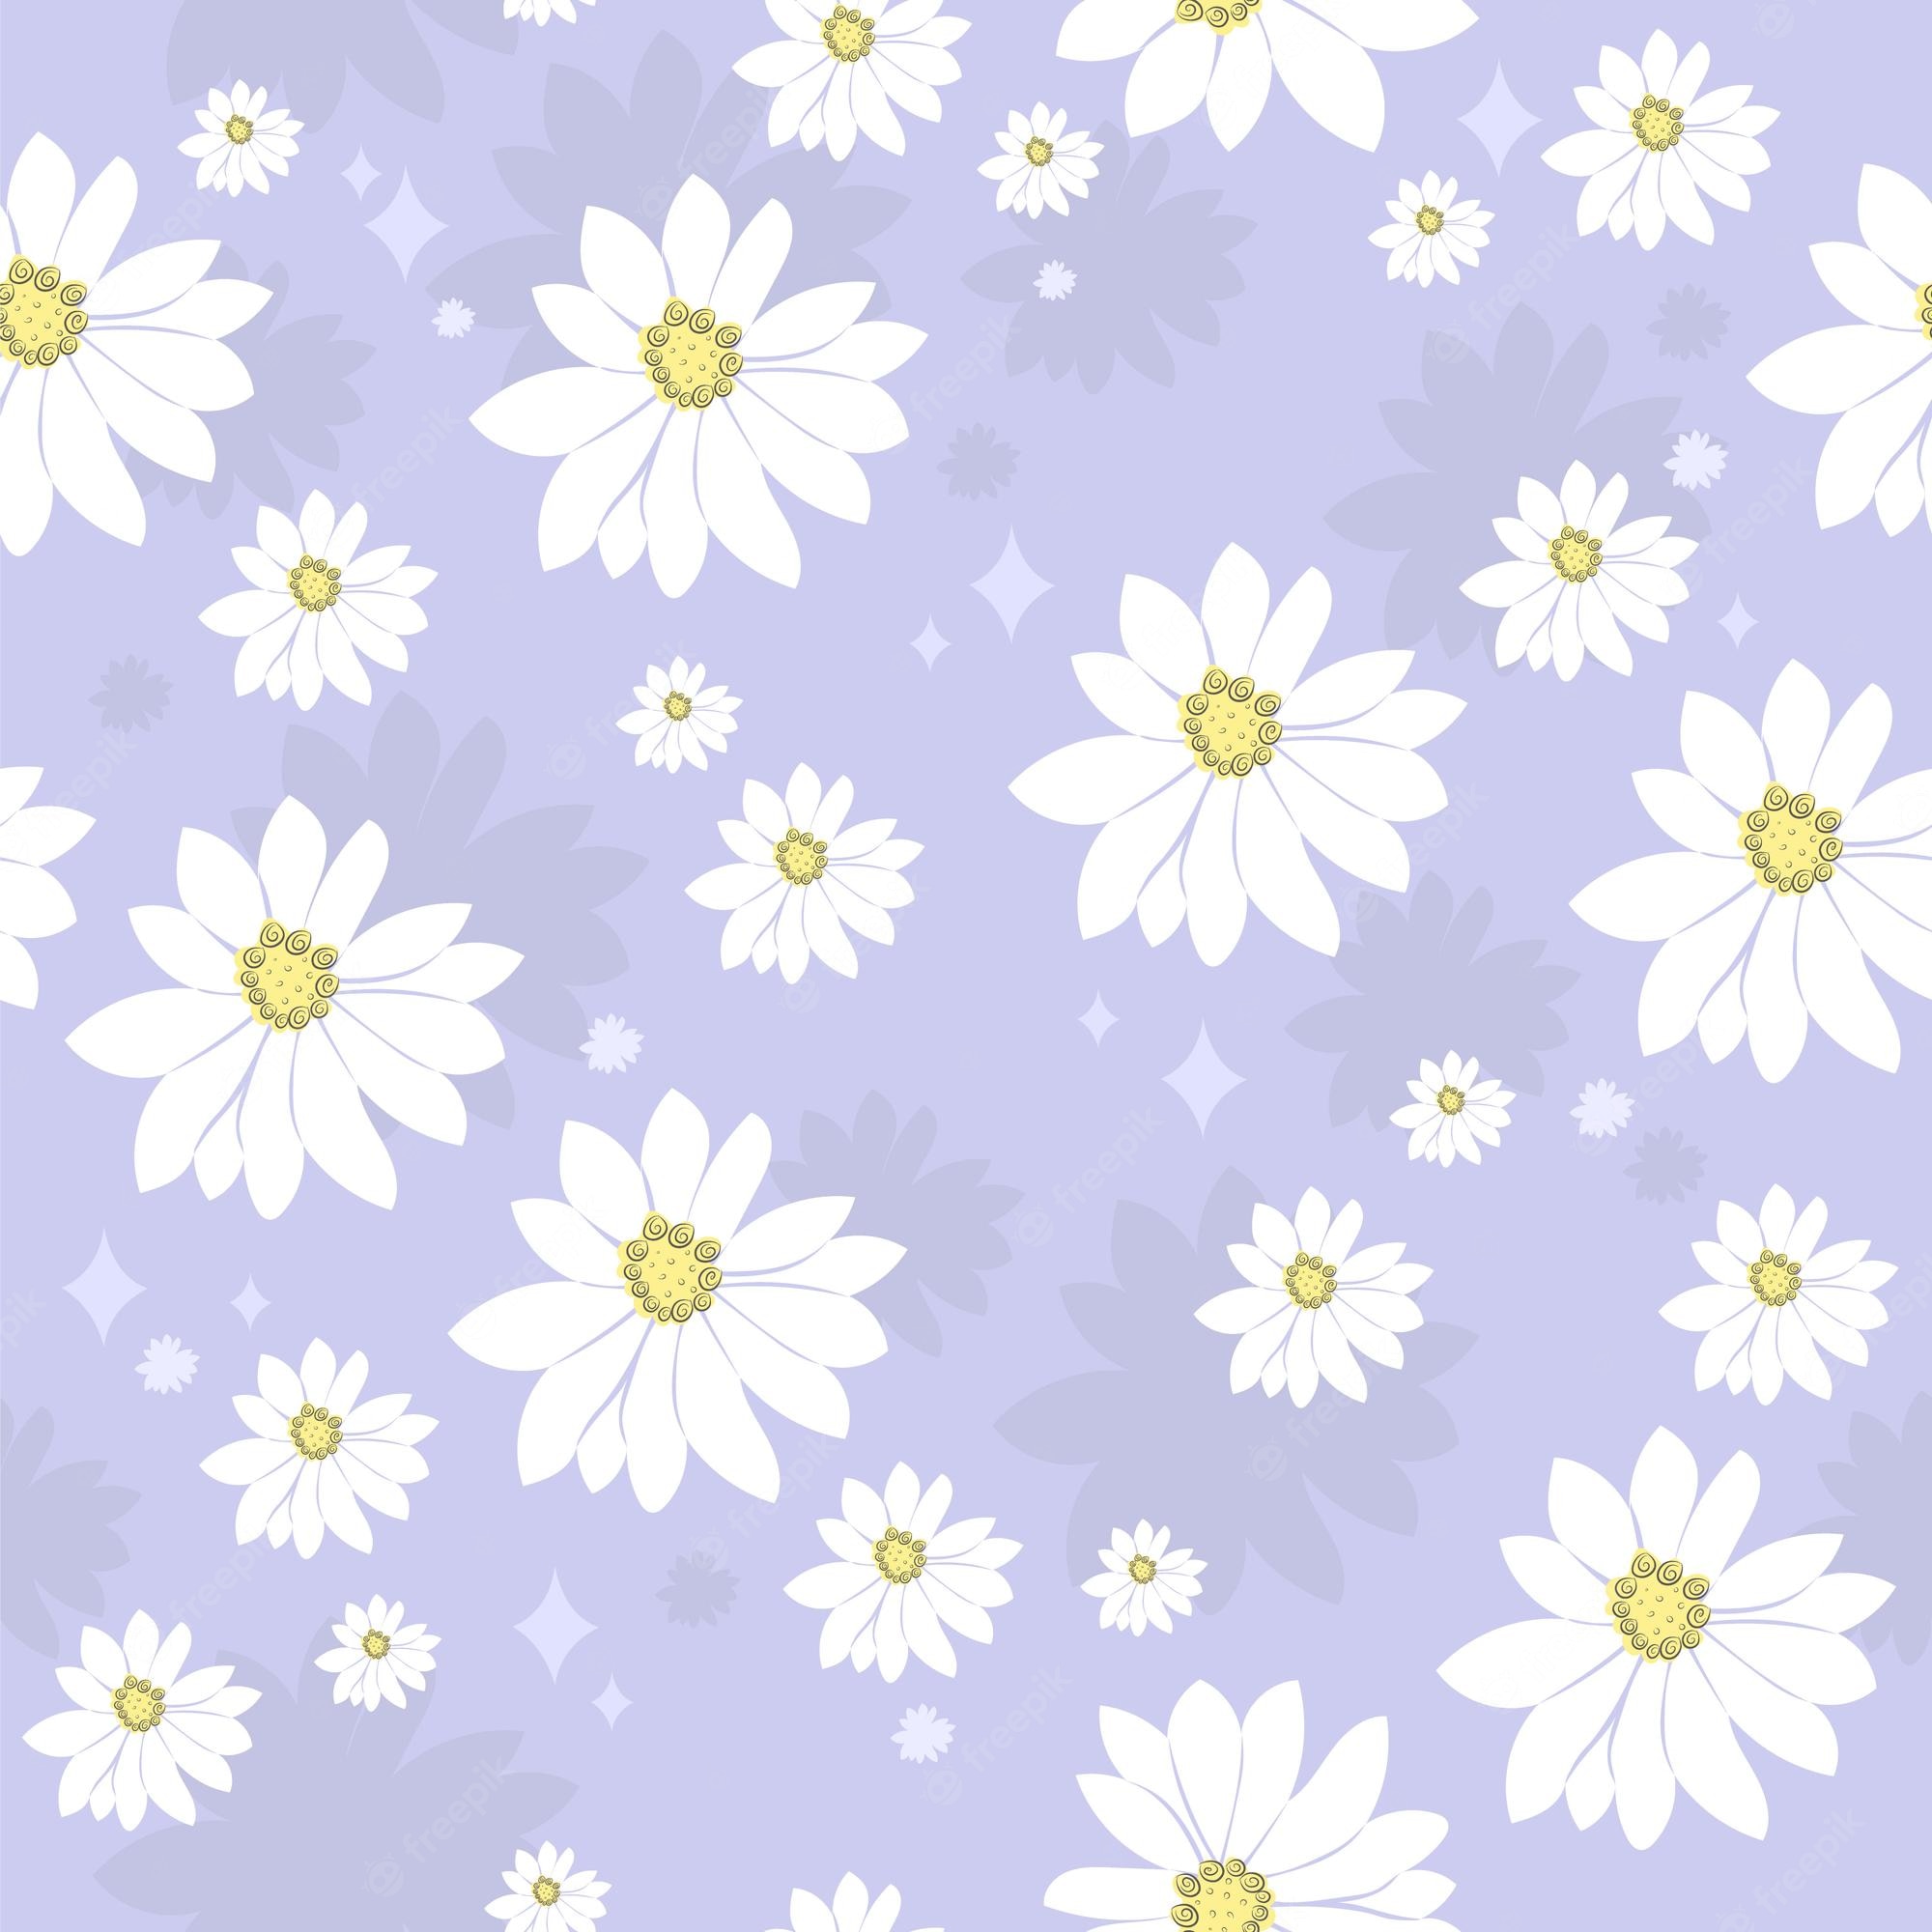 Daisy Wallpaper Image